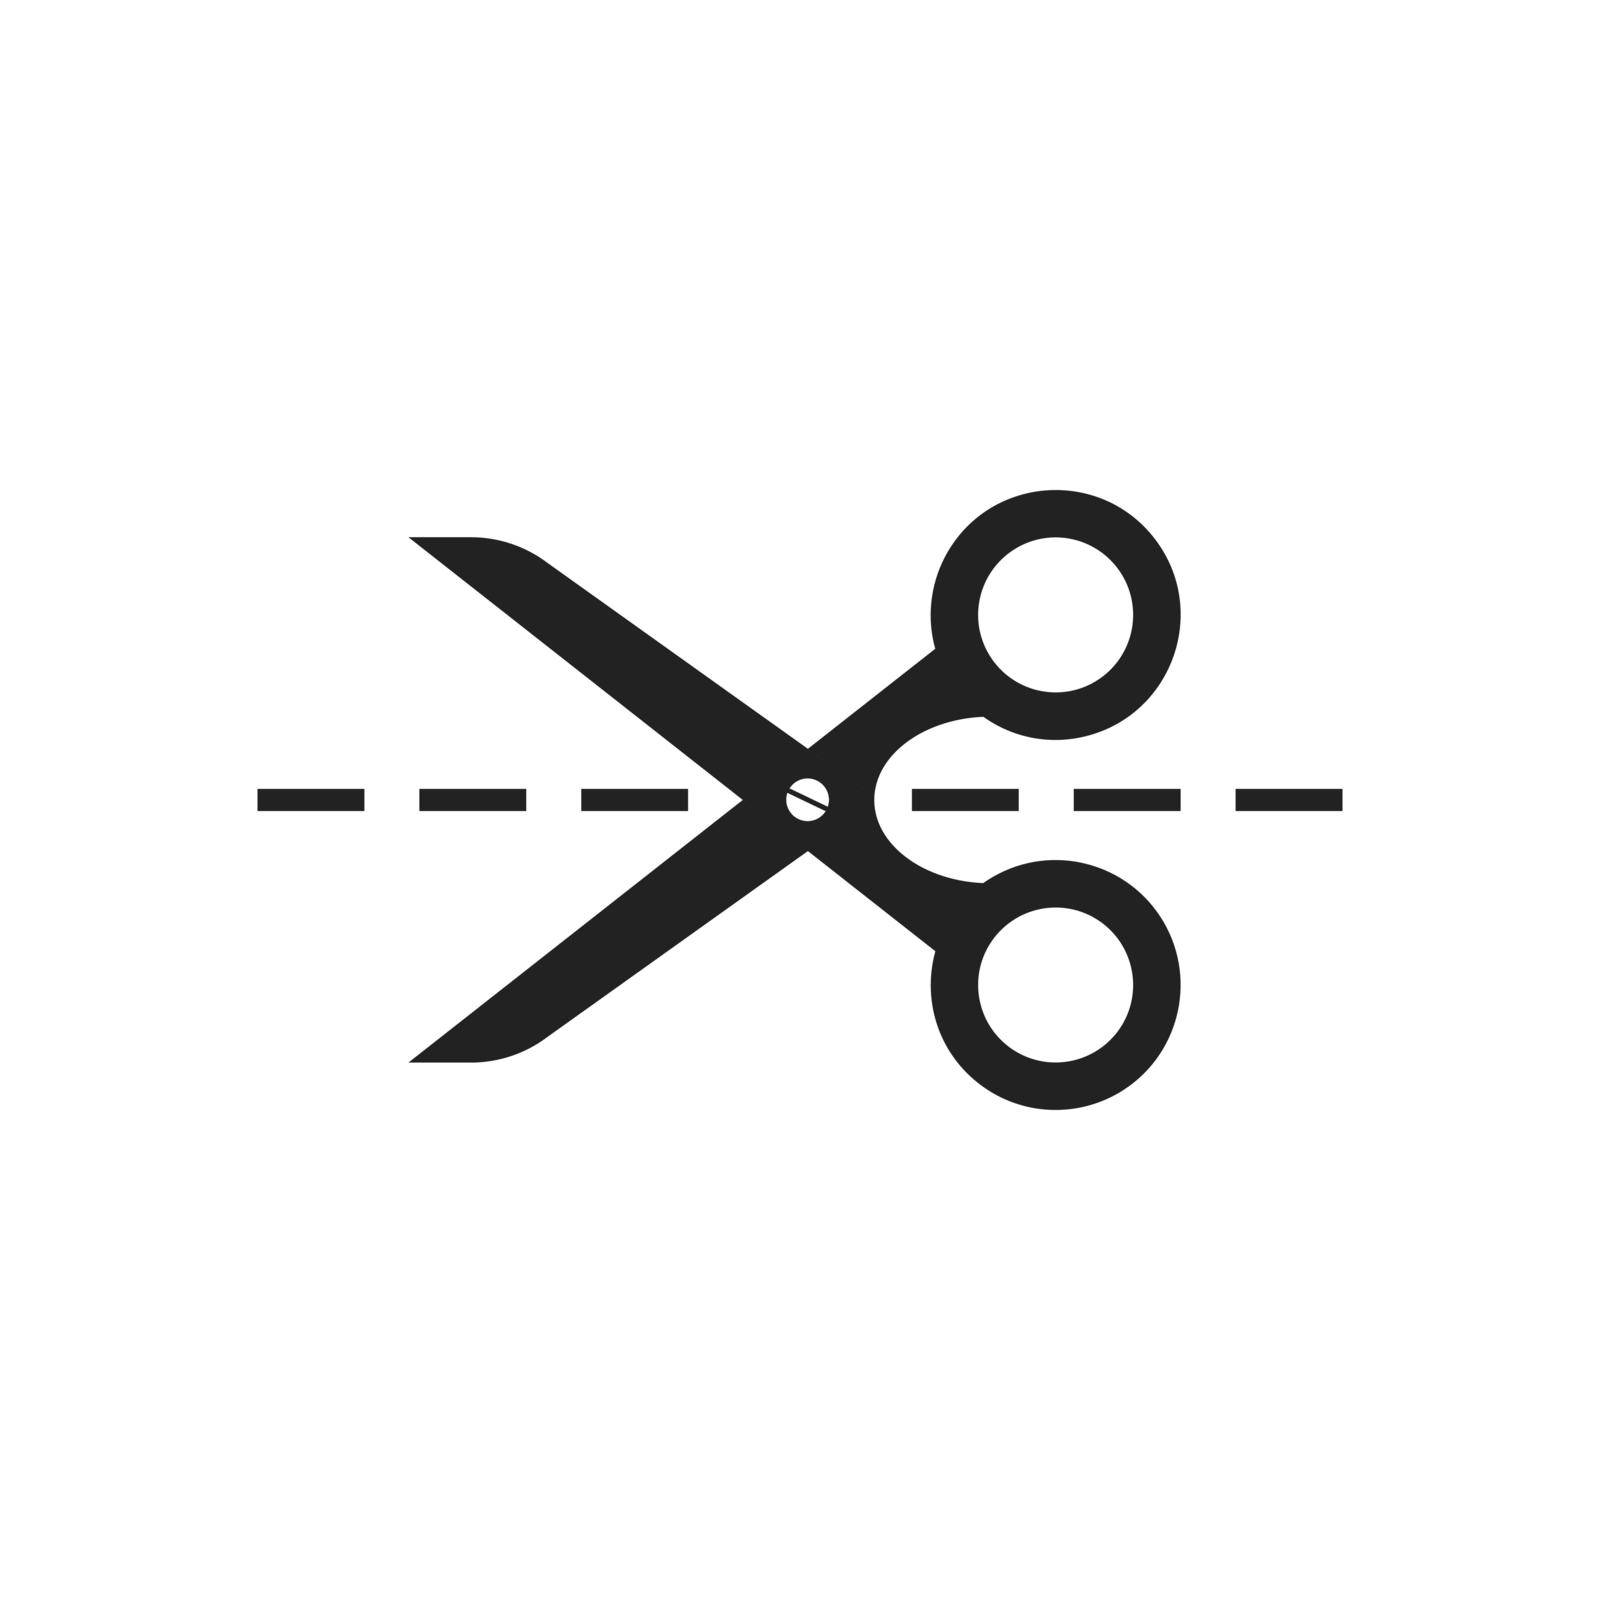 Scissors icon with cut line. Scissor vector illustration.